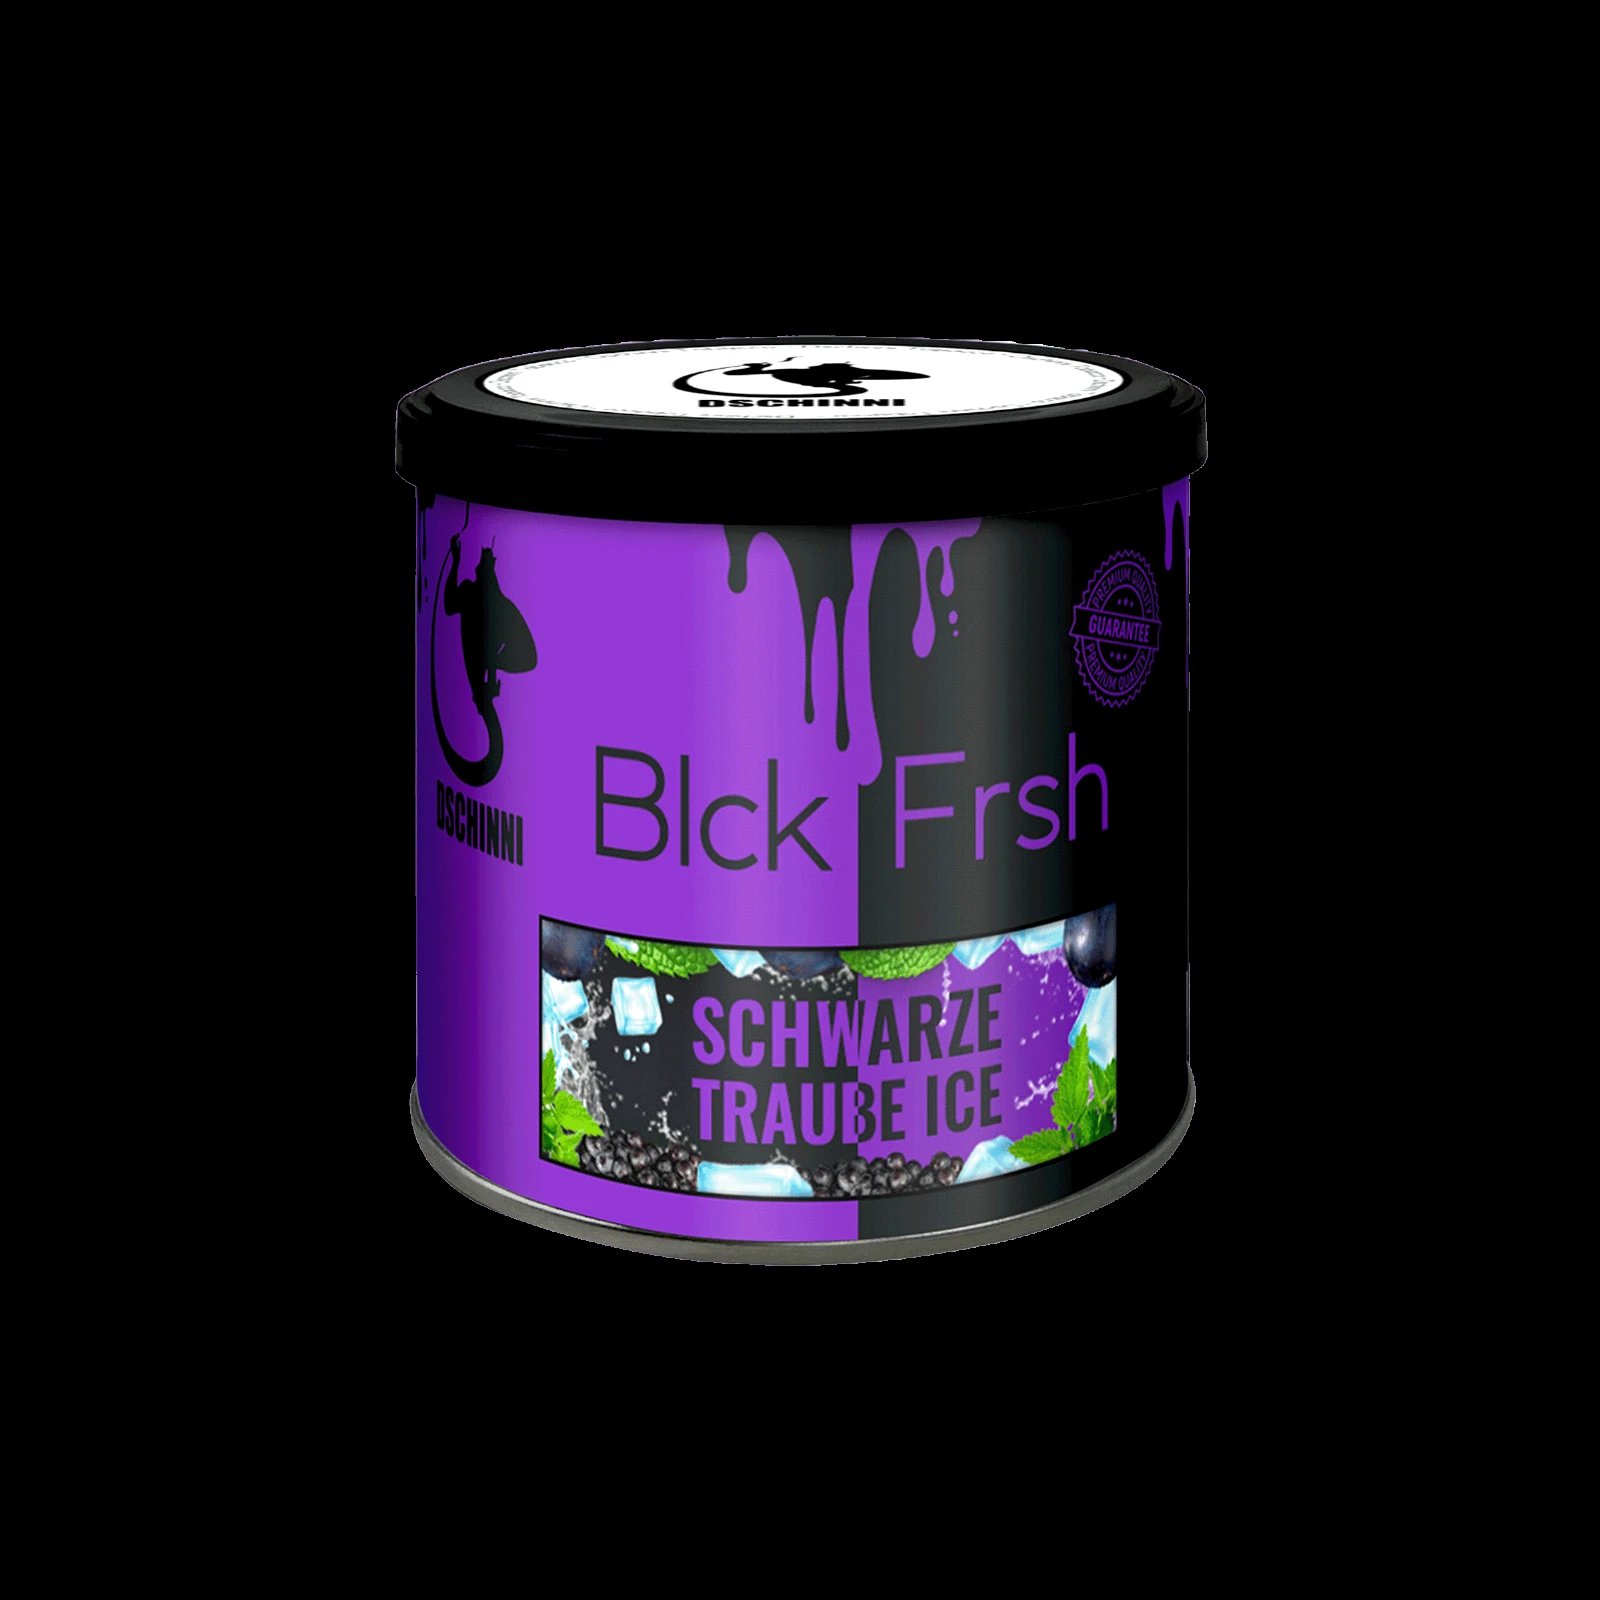 Dschinni - Pfeifentabak - Black Fresh - 65g | Shishas günstig kaufen2